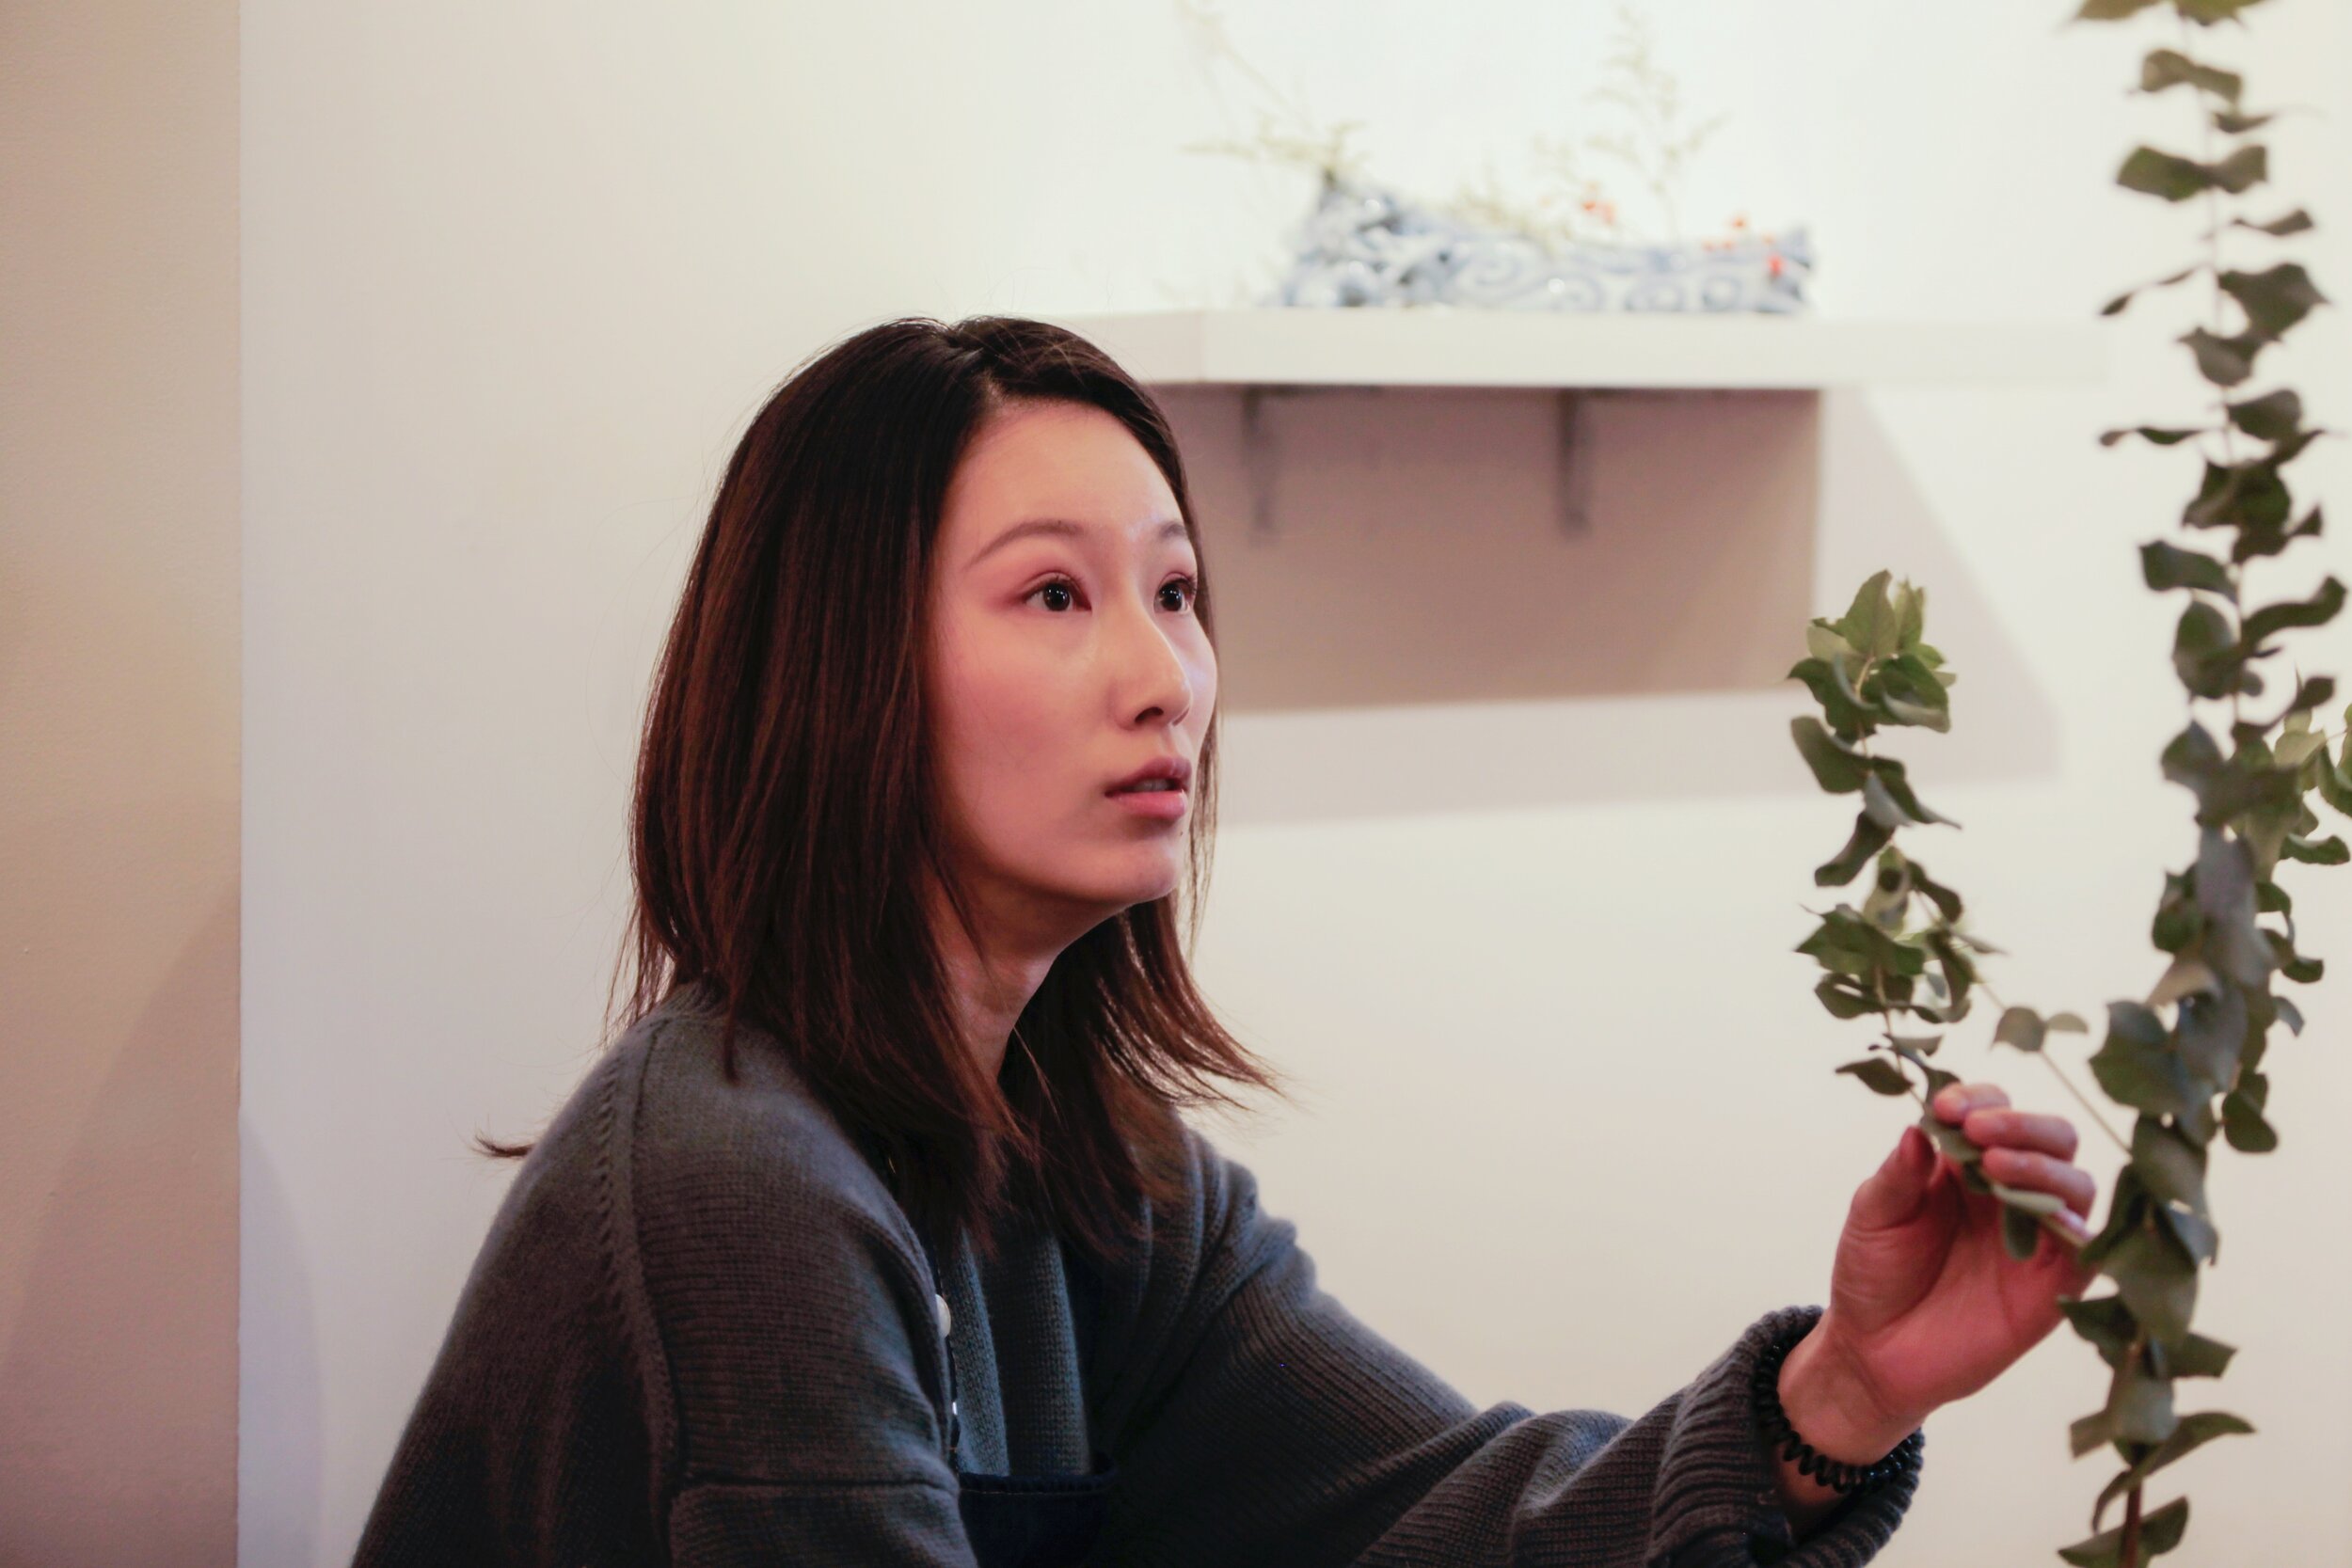   A Taste of Ikebana  at Fou Gallery (11.9.2019), photo by Jingxin Hu, courtesy Fou Gallery. 